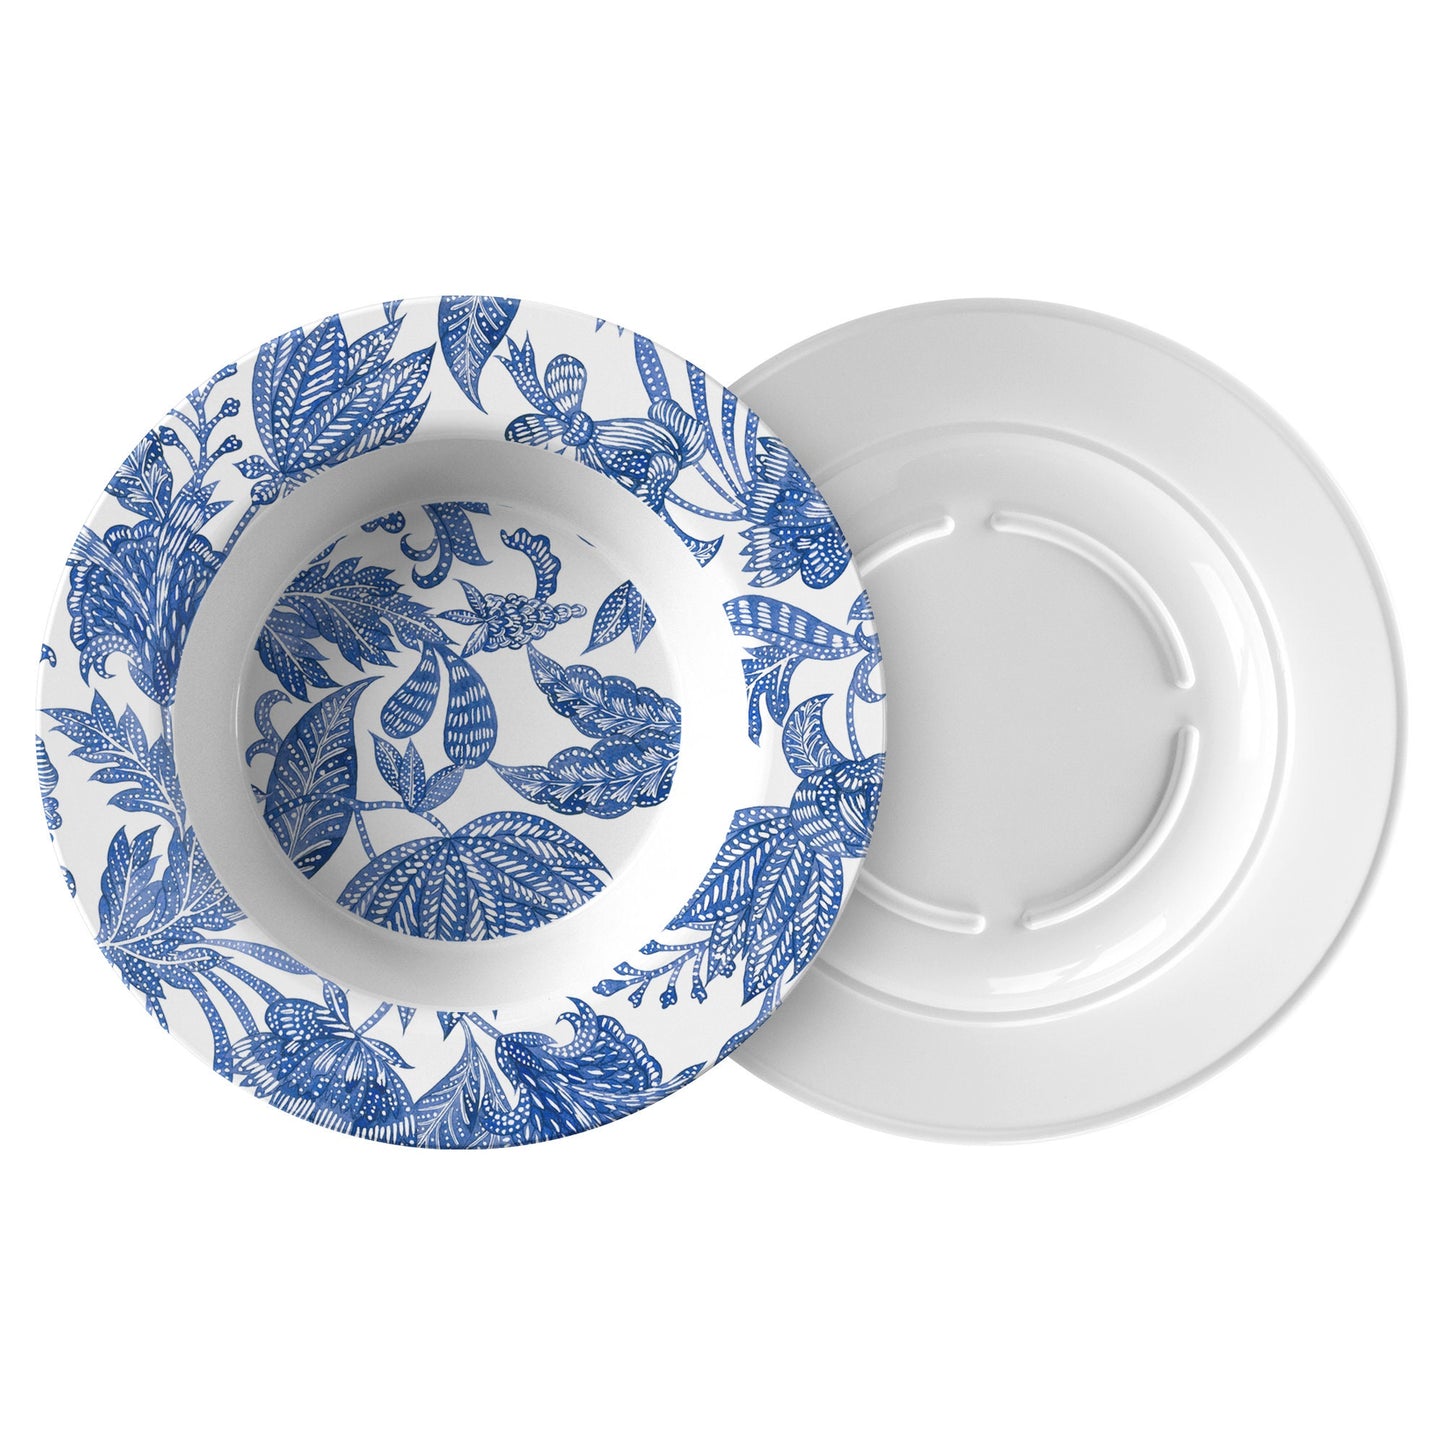 Floral Batik Bowls, Set of 4, Blue & White, Luxury Thermosaf Plastic